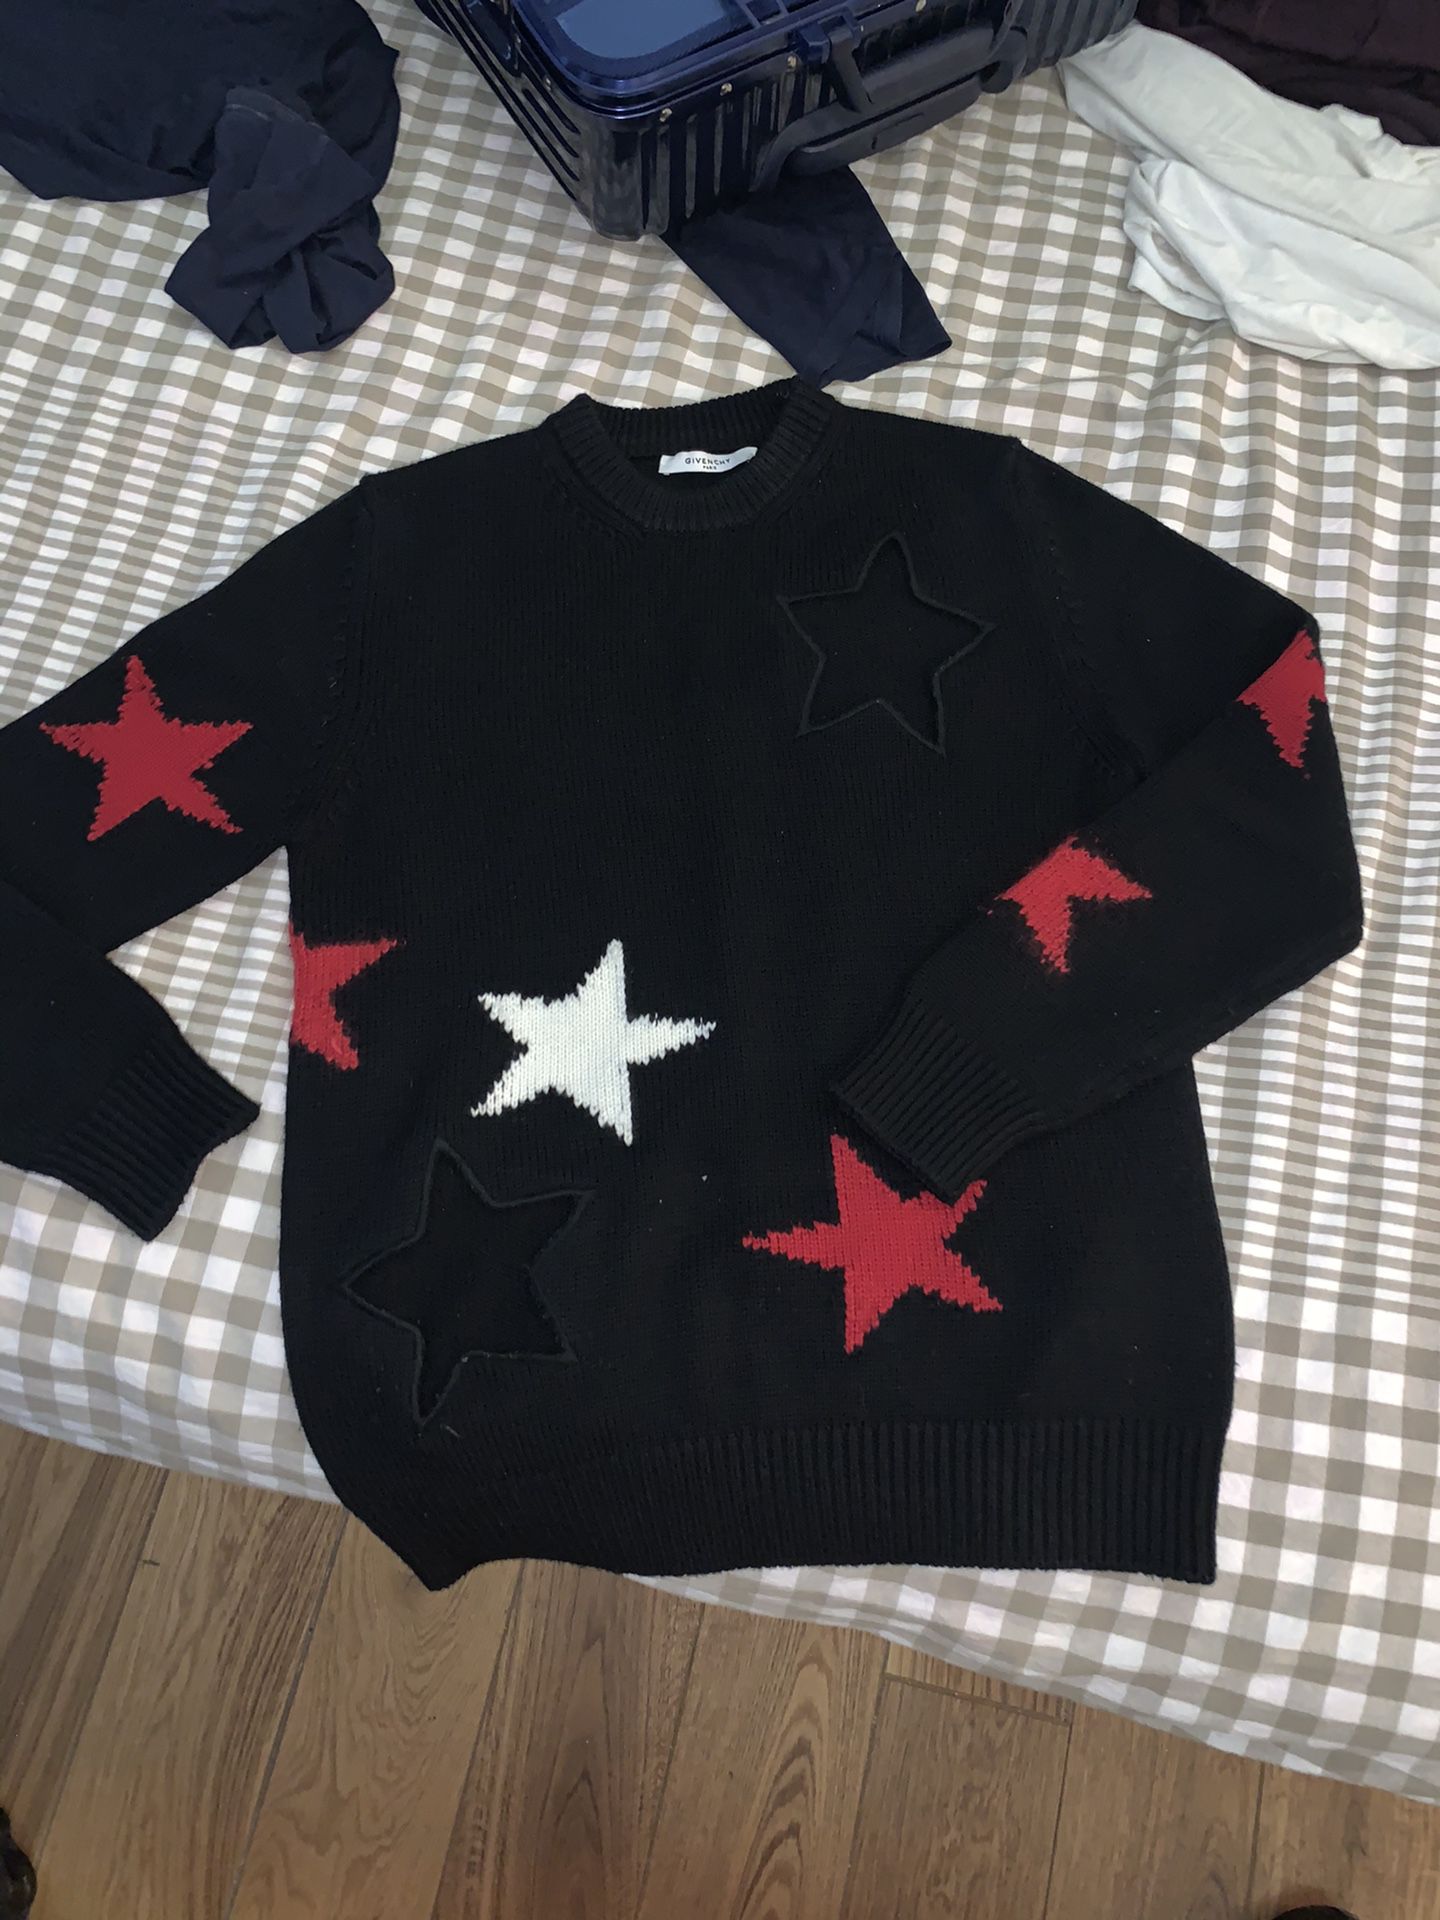 Givenchy sweater size medium